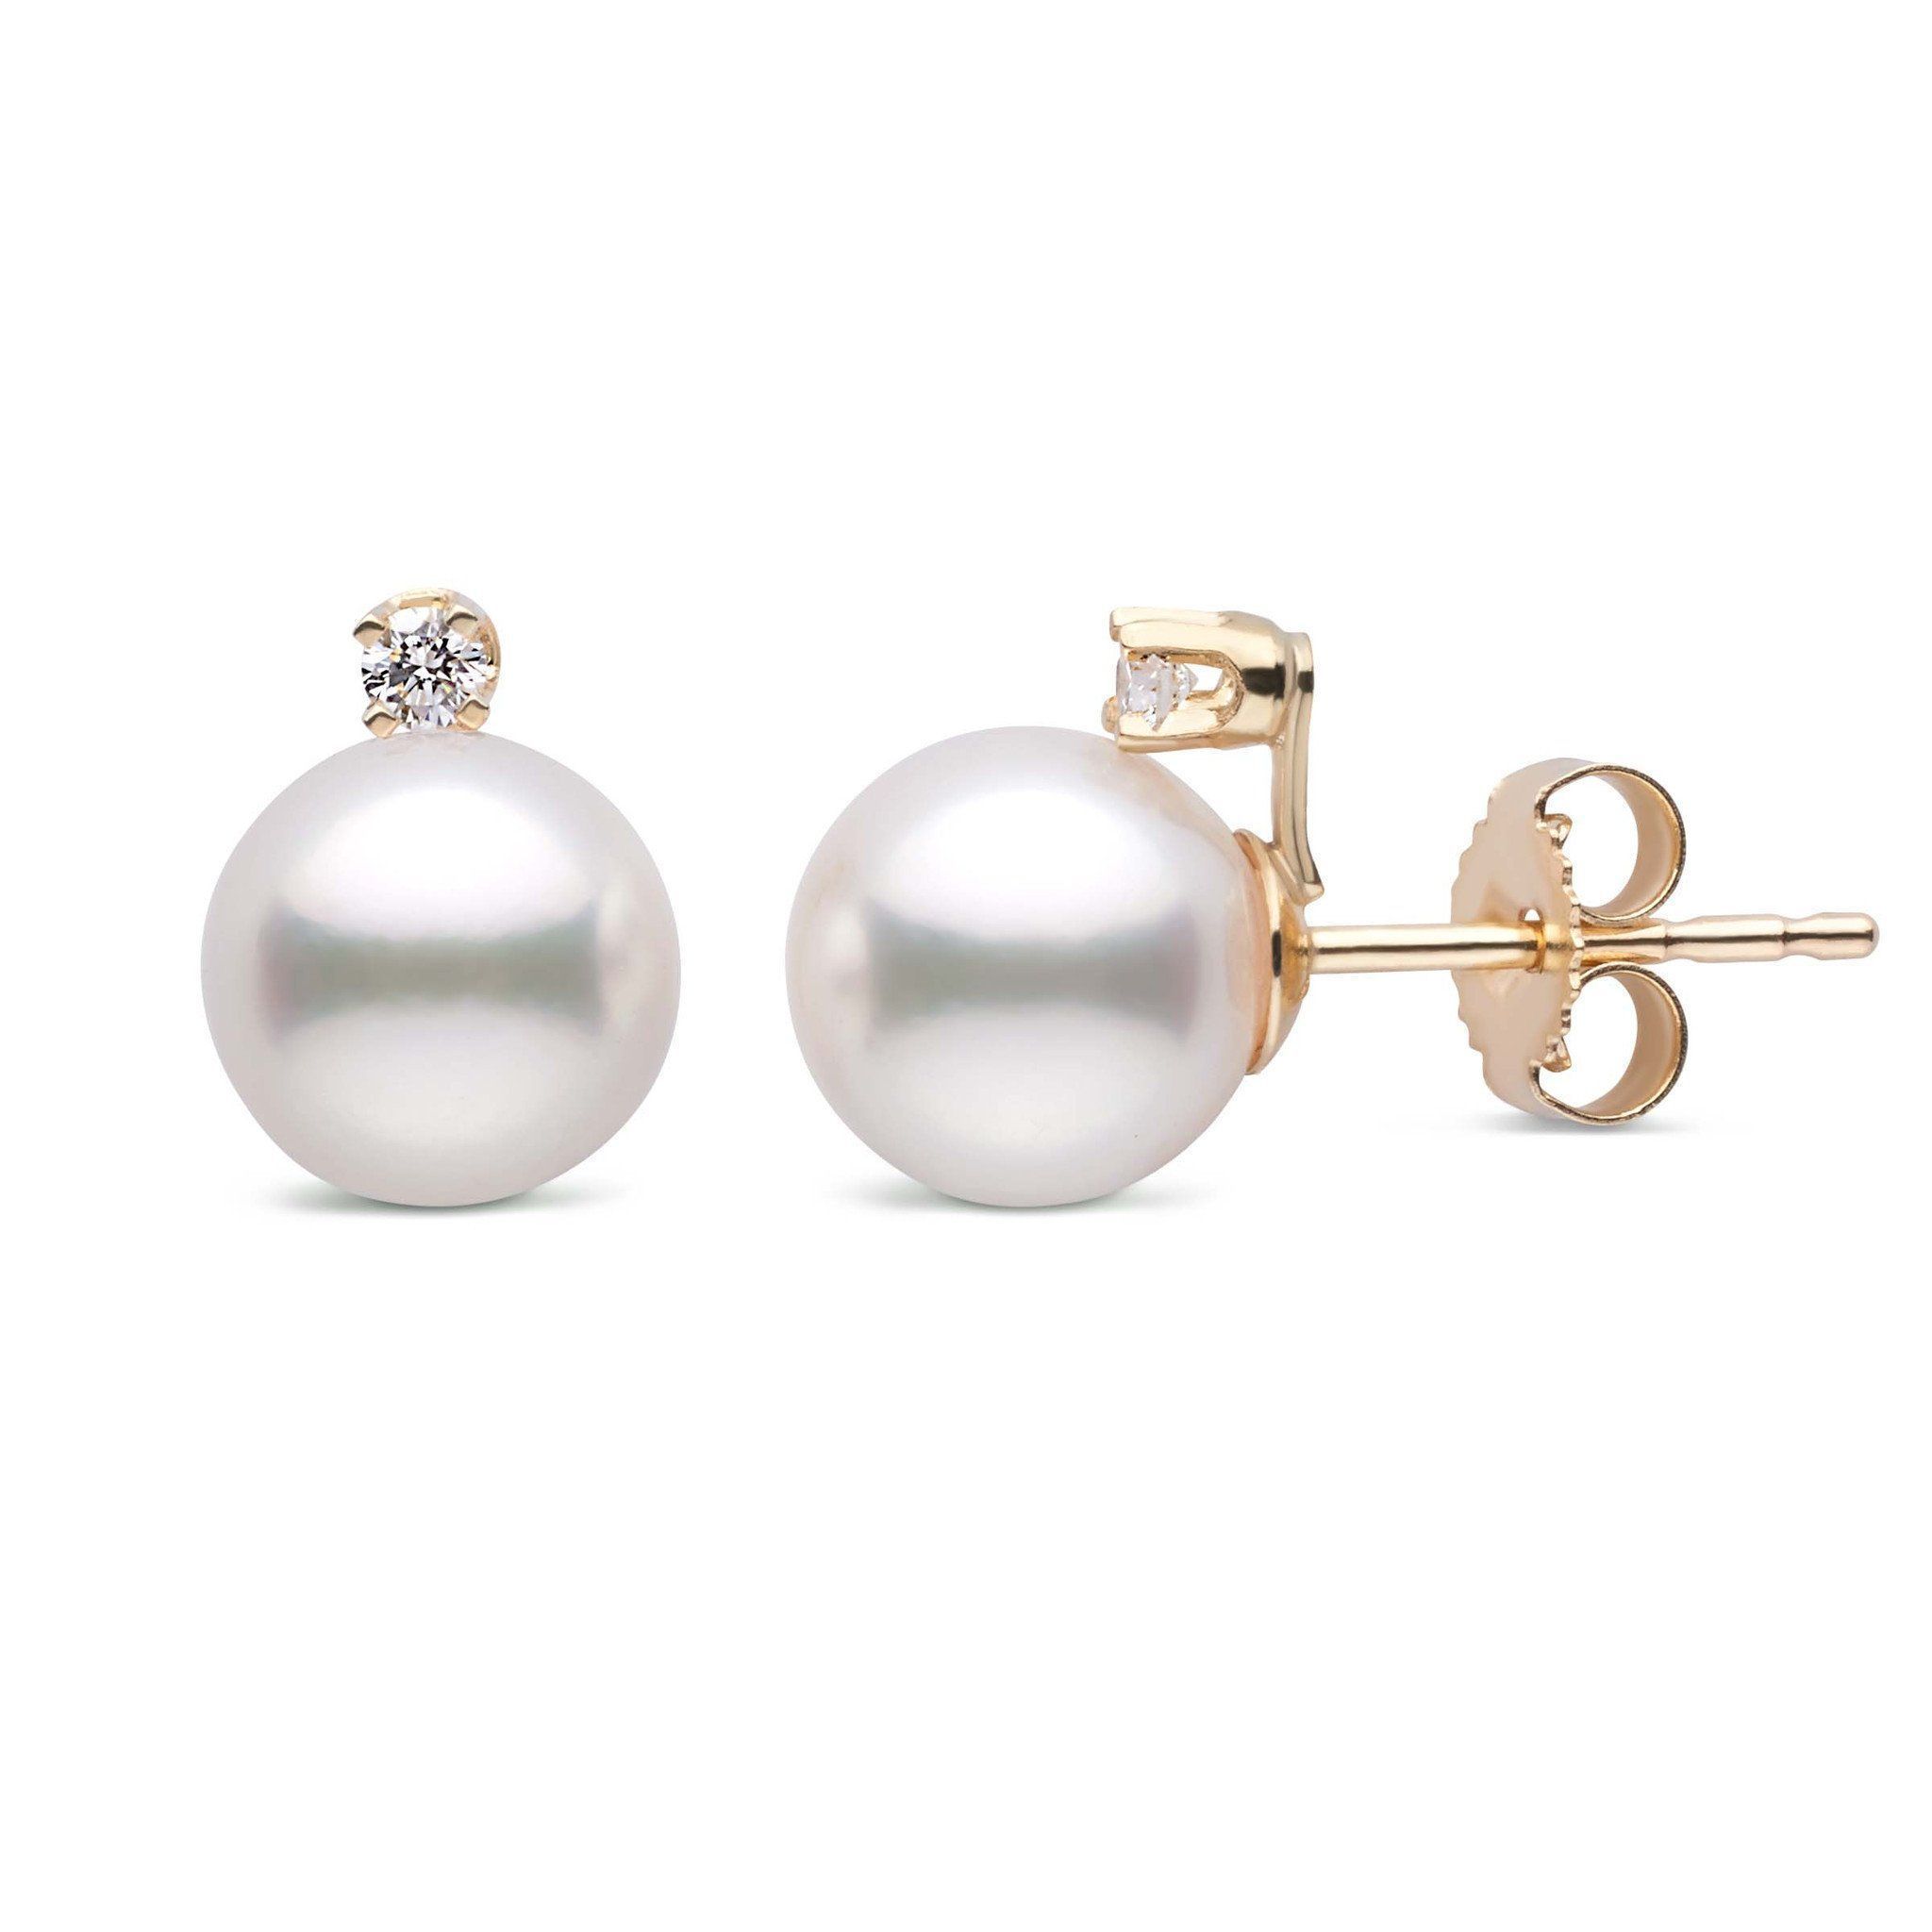 Buy Pearl Drop Earrings Online in India  Designs  Best Price  Candere by  Kalyan Jewellers